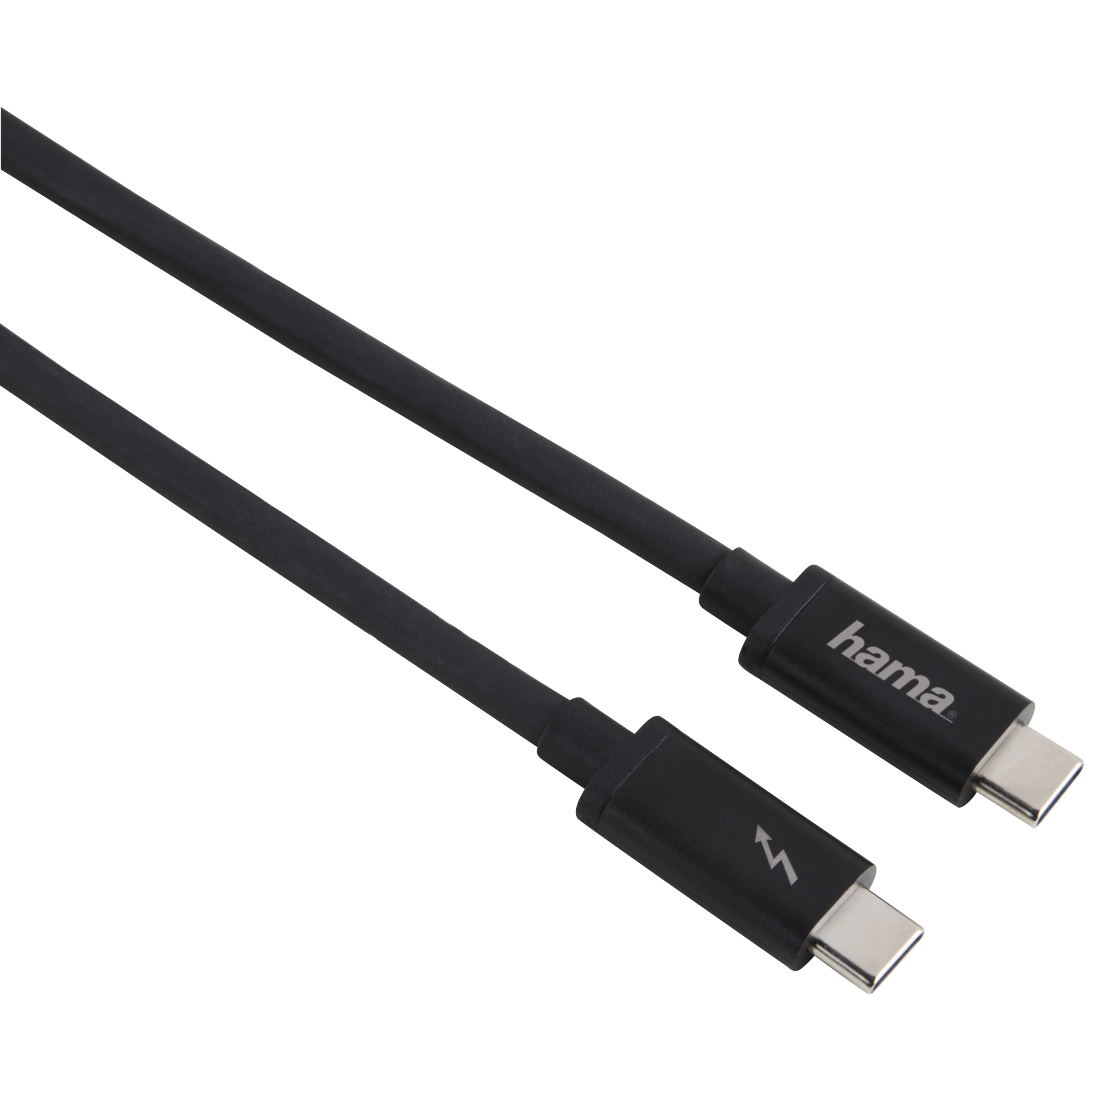 Hama Thunderbolt 3 Cable "USB-C" 0.5m